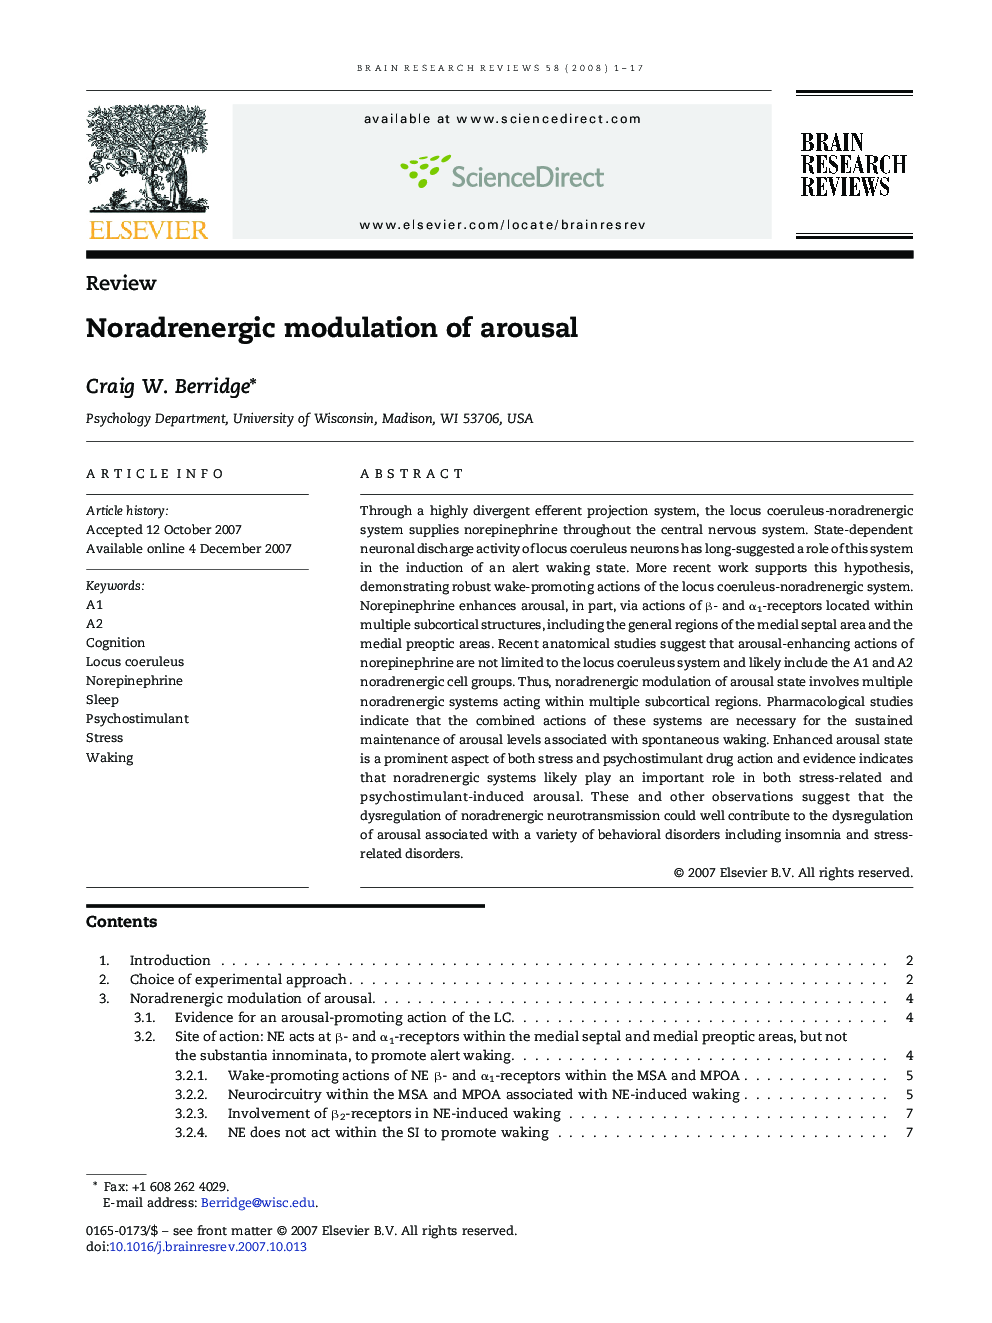 Noradrenergic modulation of arousal